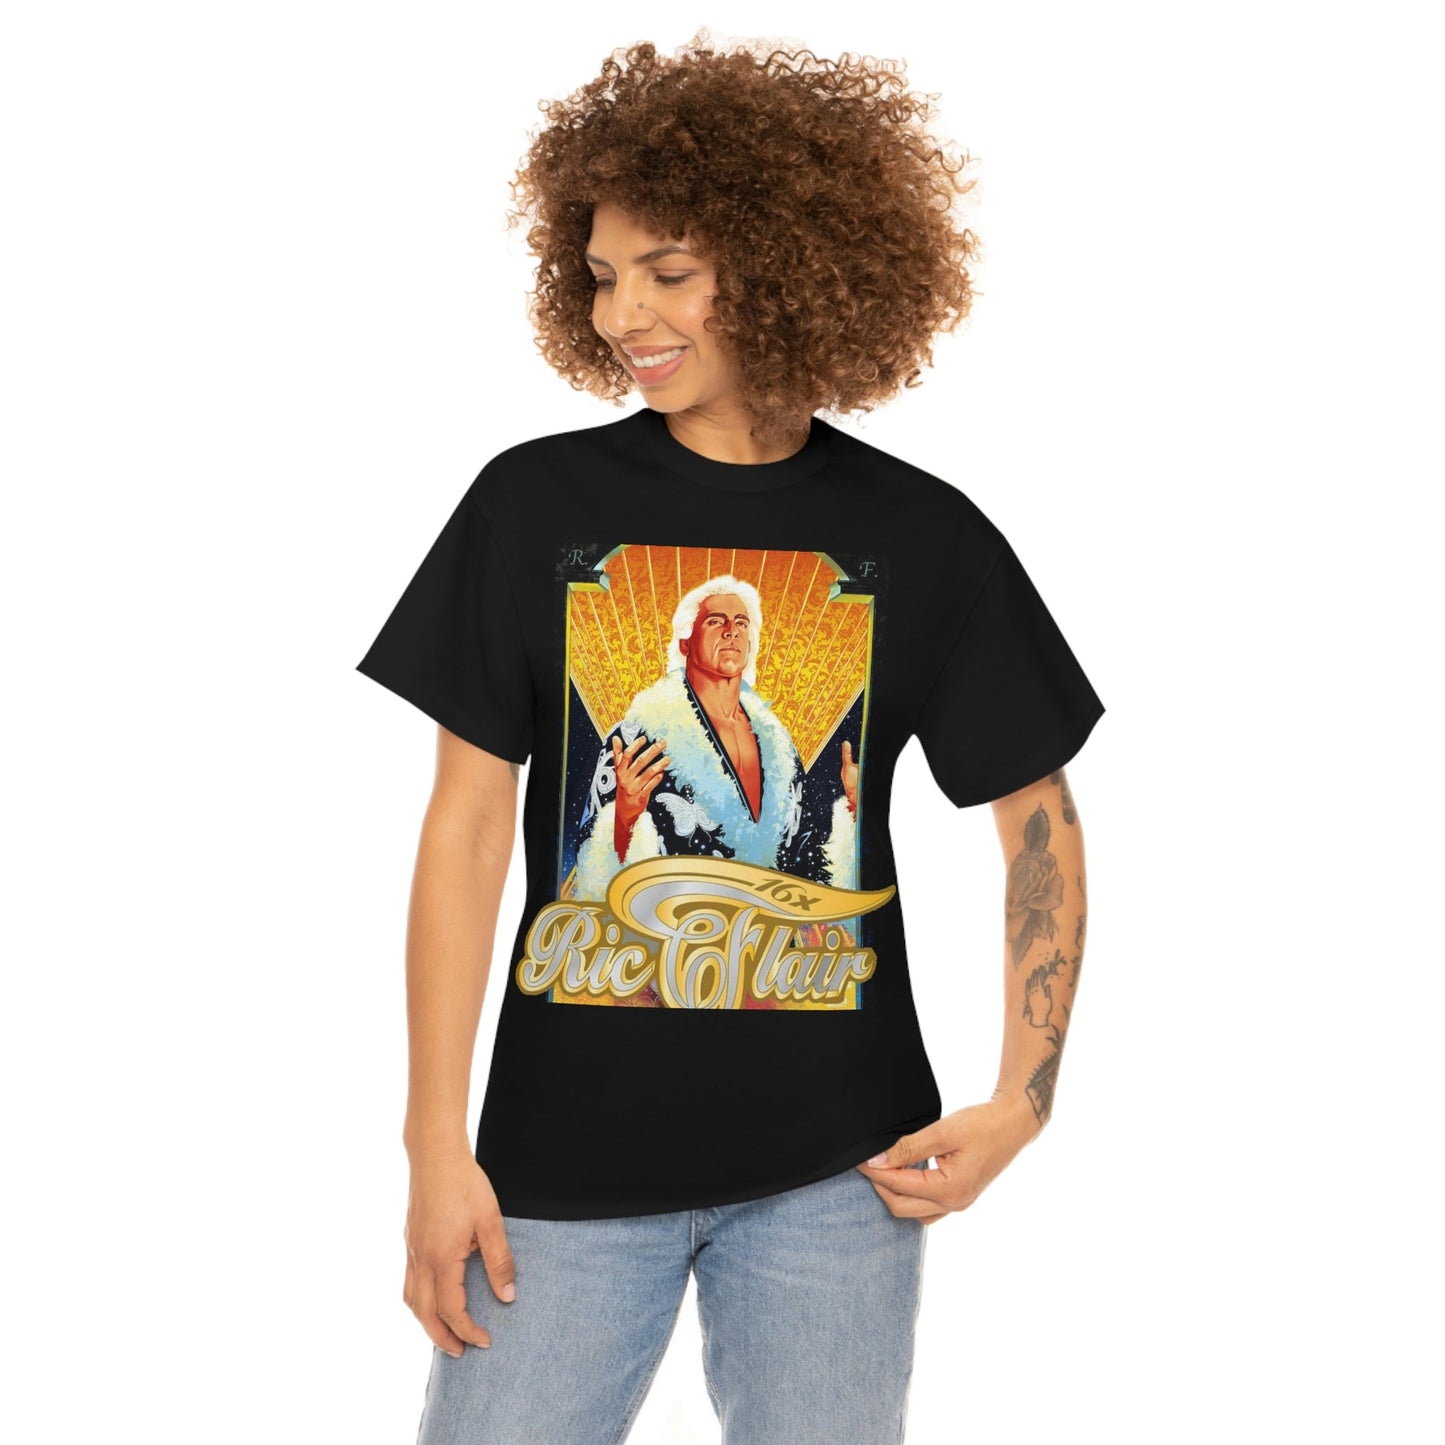 Ric Flair T-Shirt - RetroTeeShop